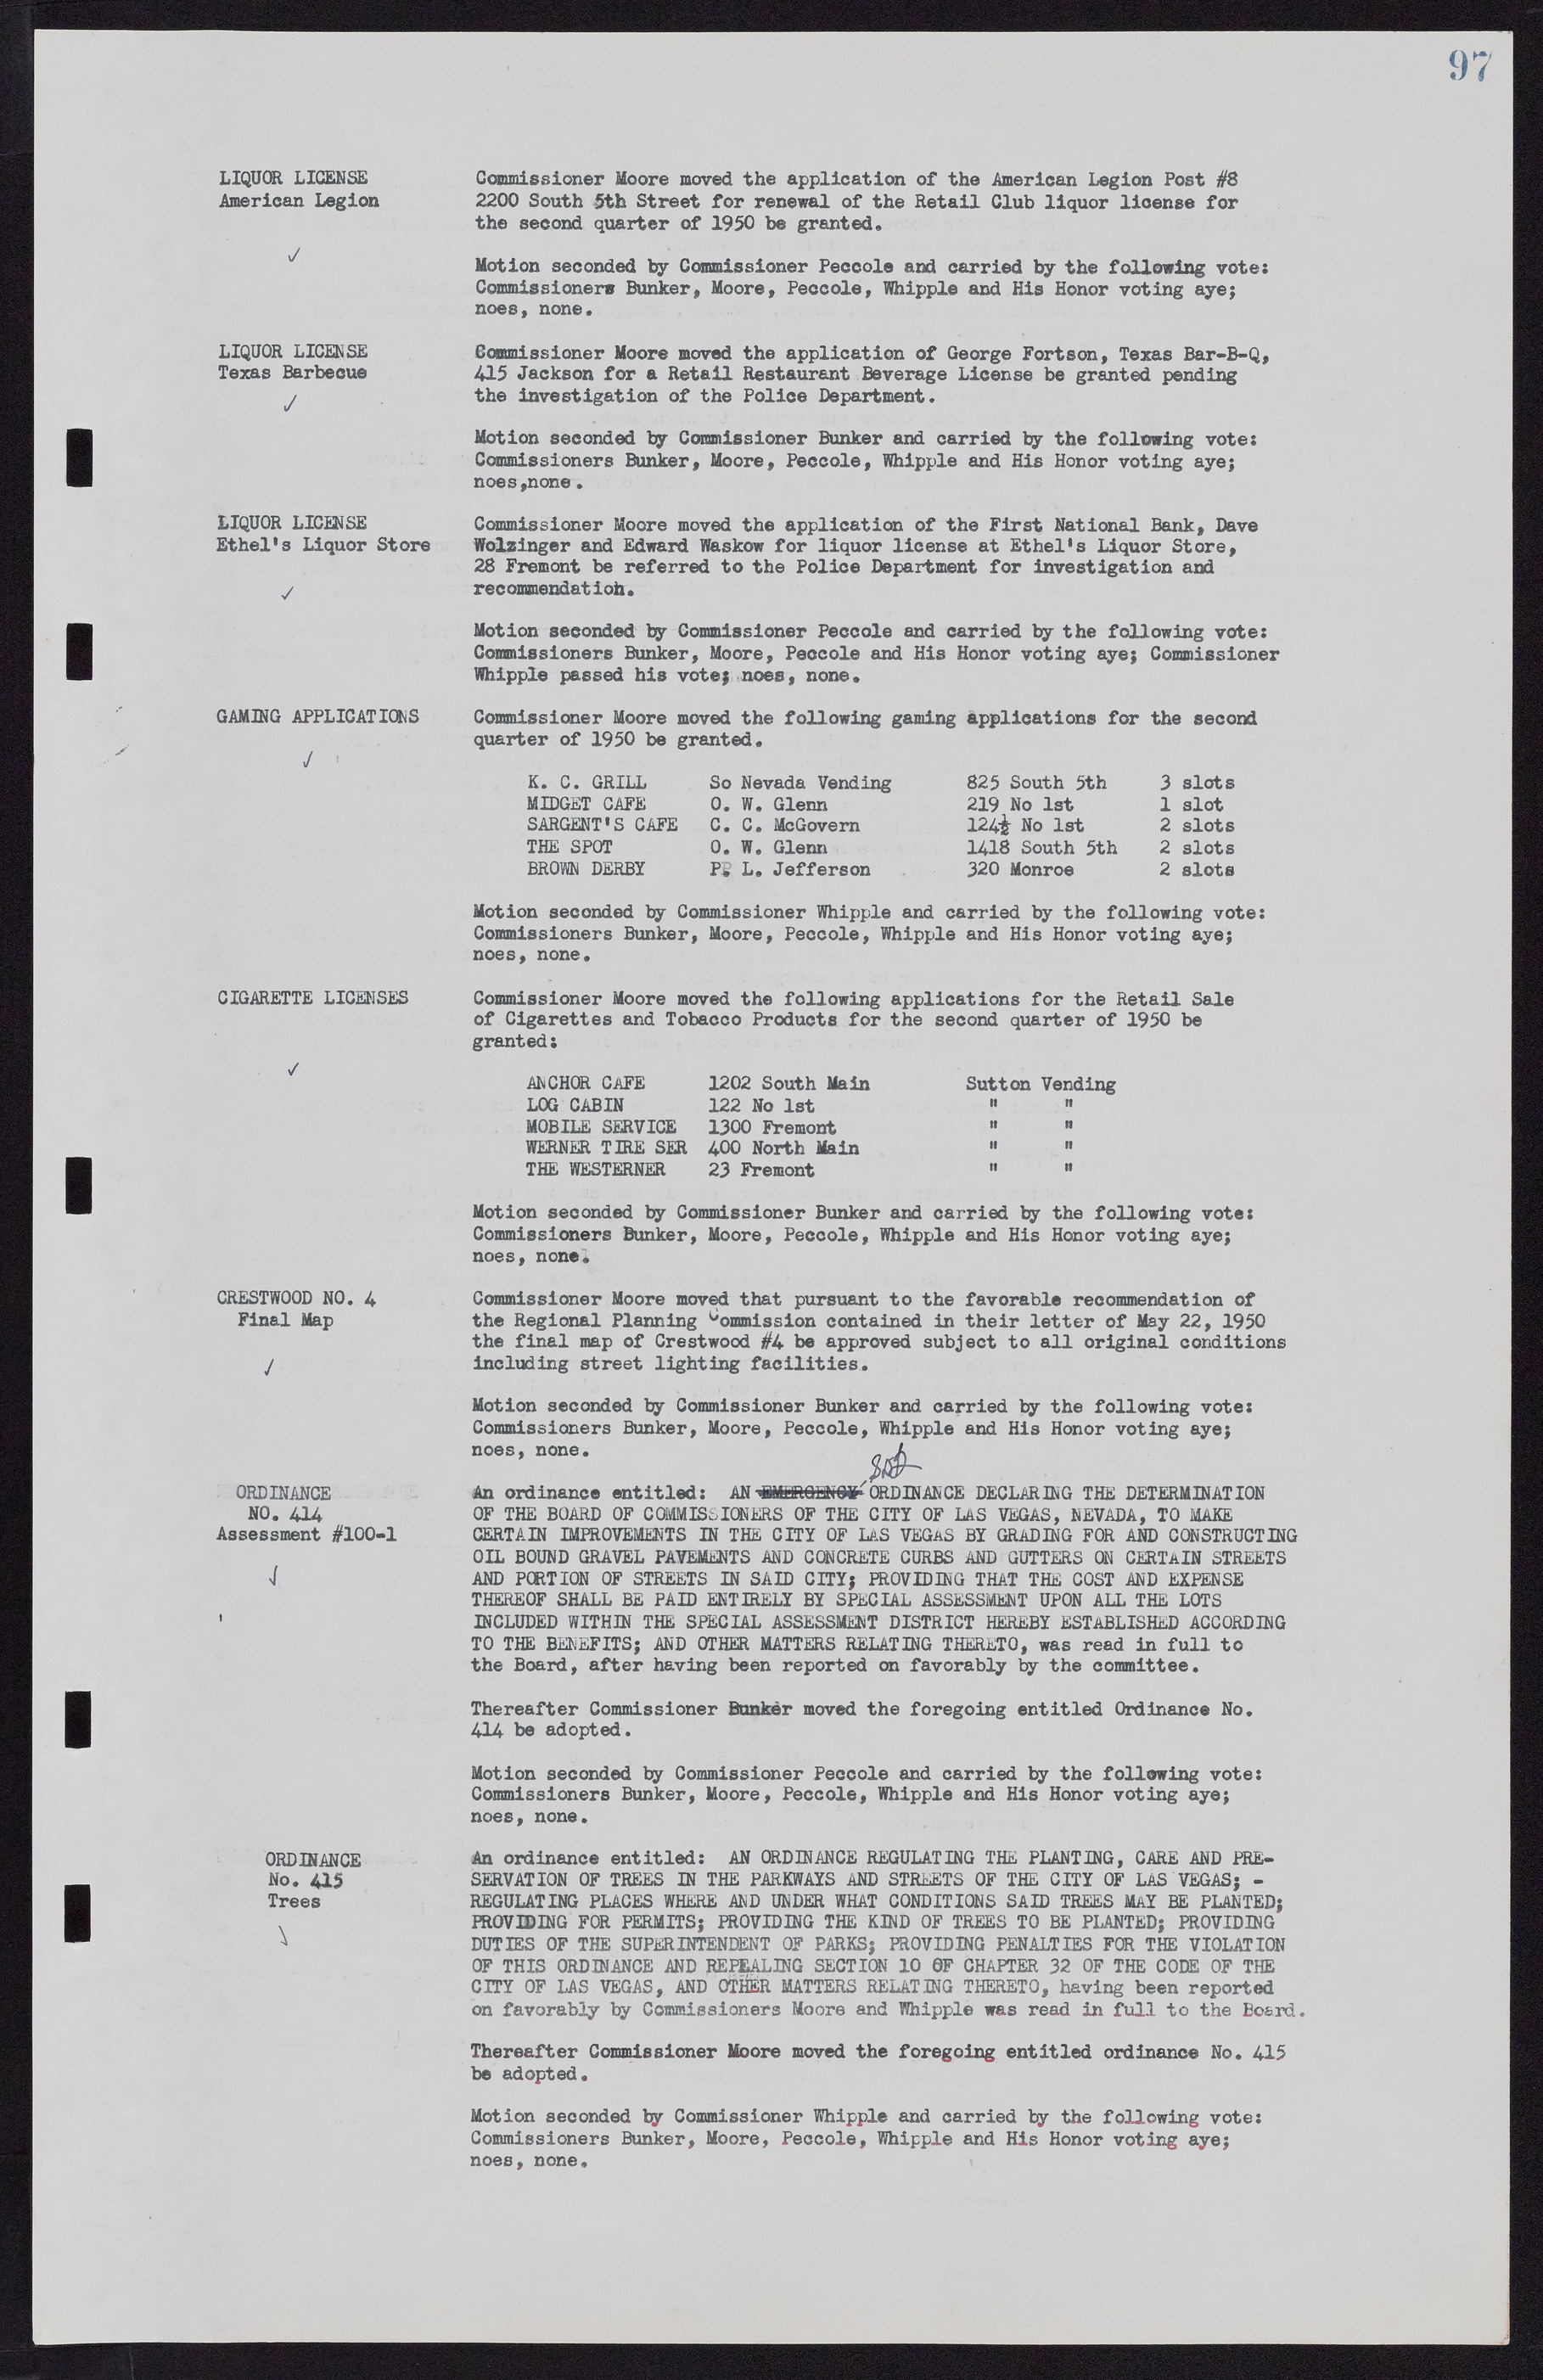 Las Vegas City Commission Minutes, November 7, 1949 to May 21, 1952, lvc000007-105